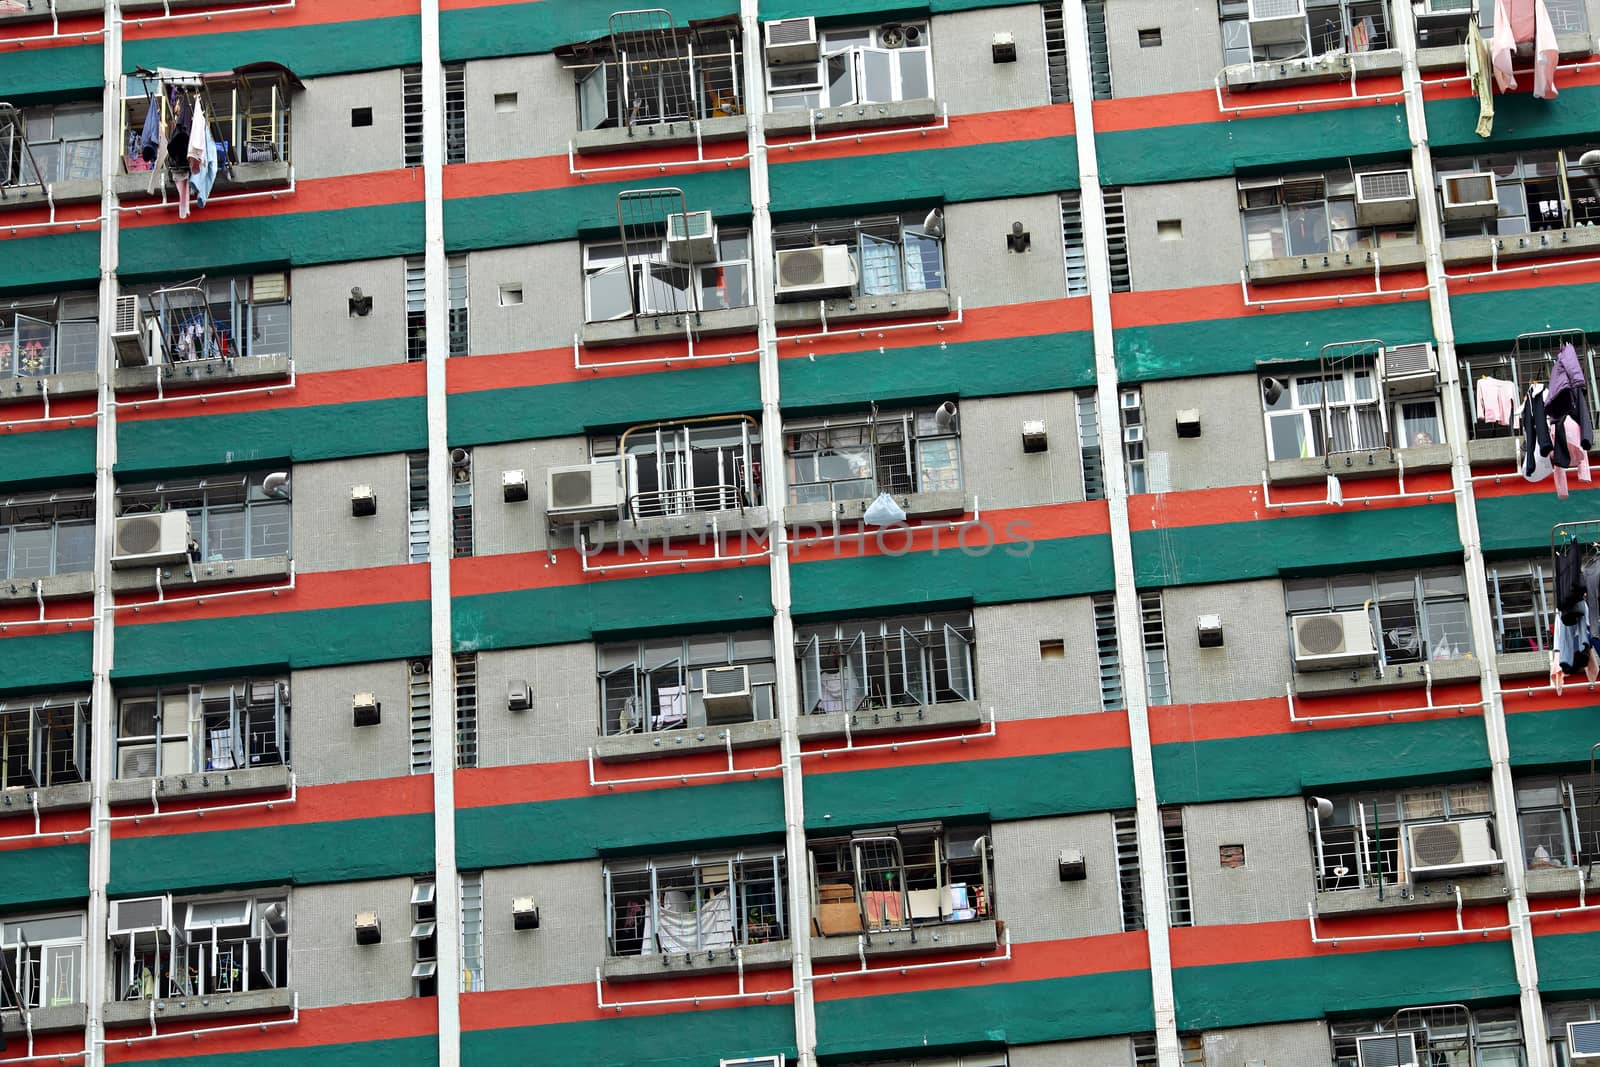 Residential building in Hong Kong by leungchopan